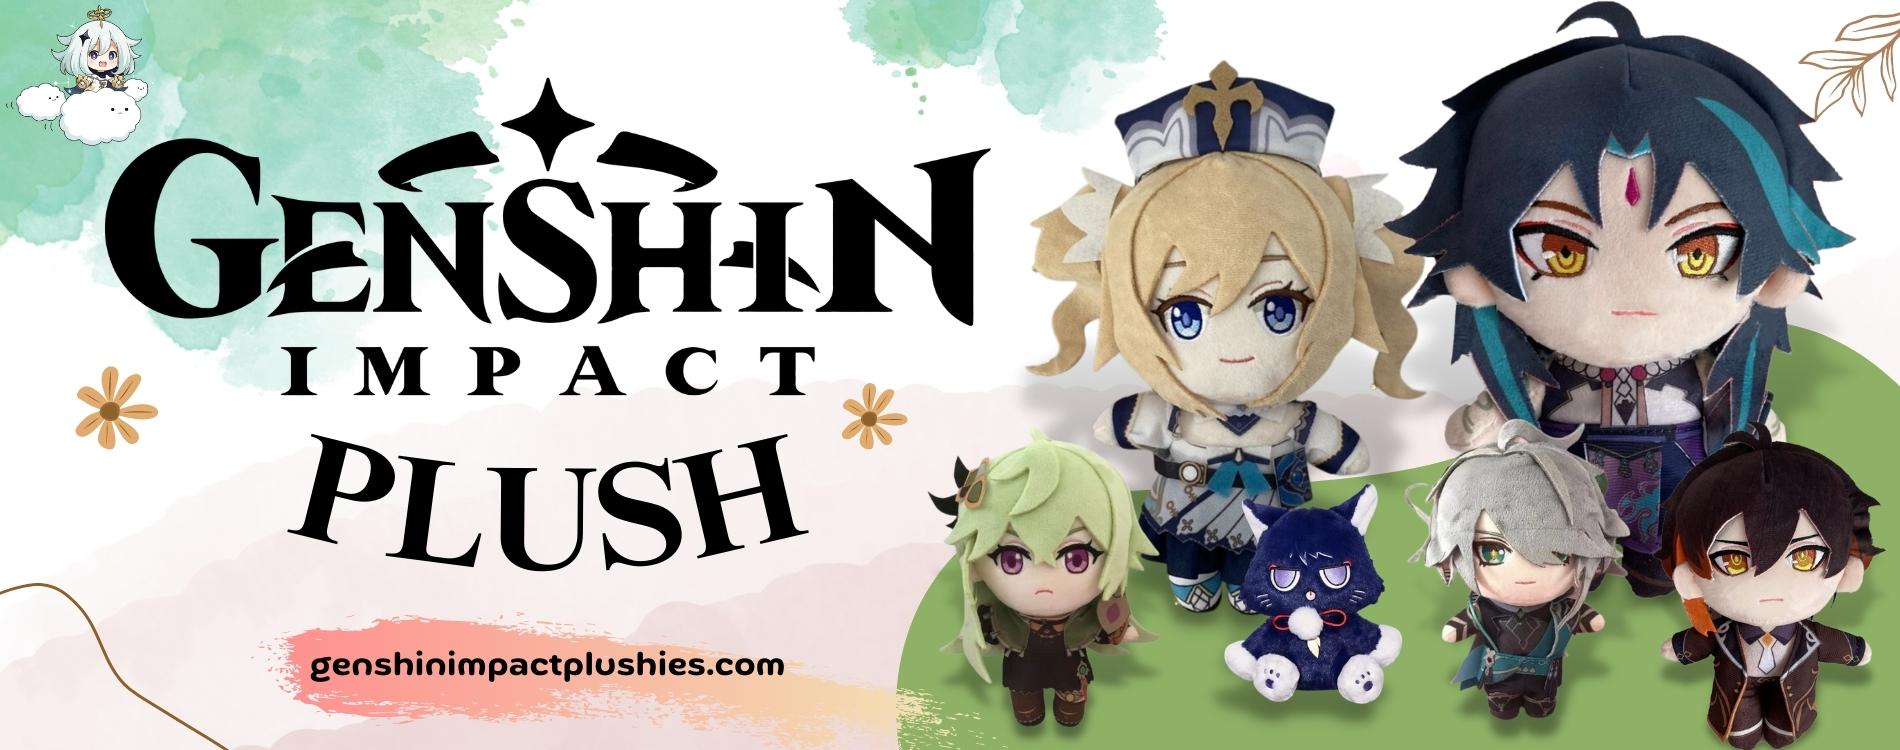 36 - Genshin Impact Plush